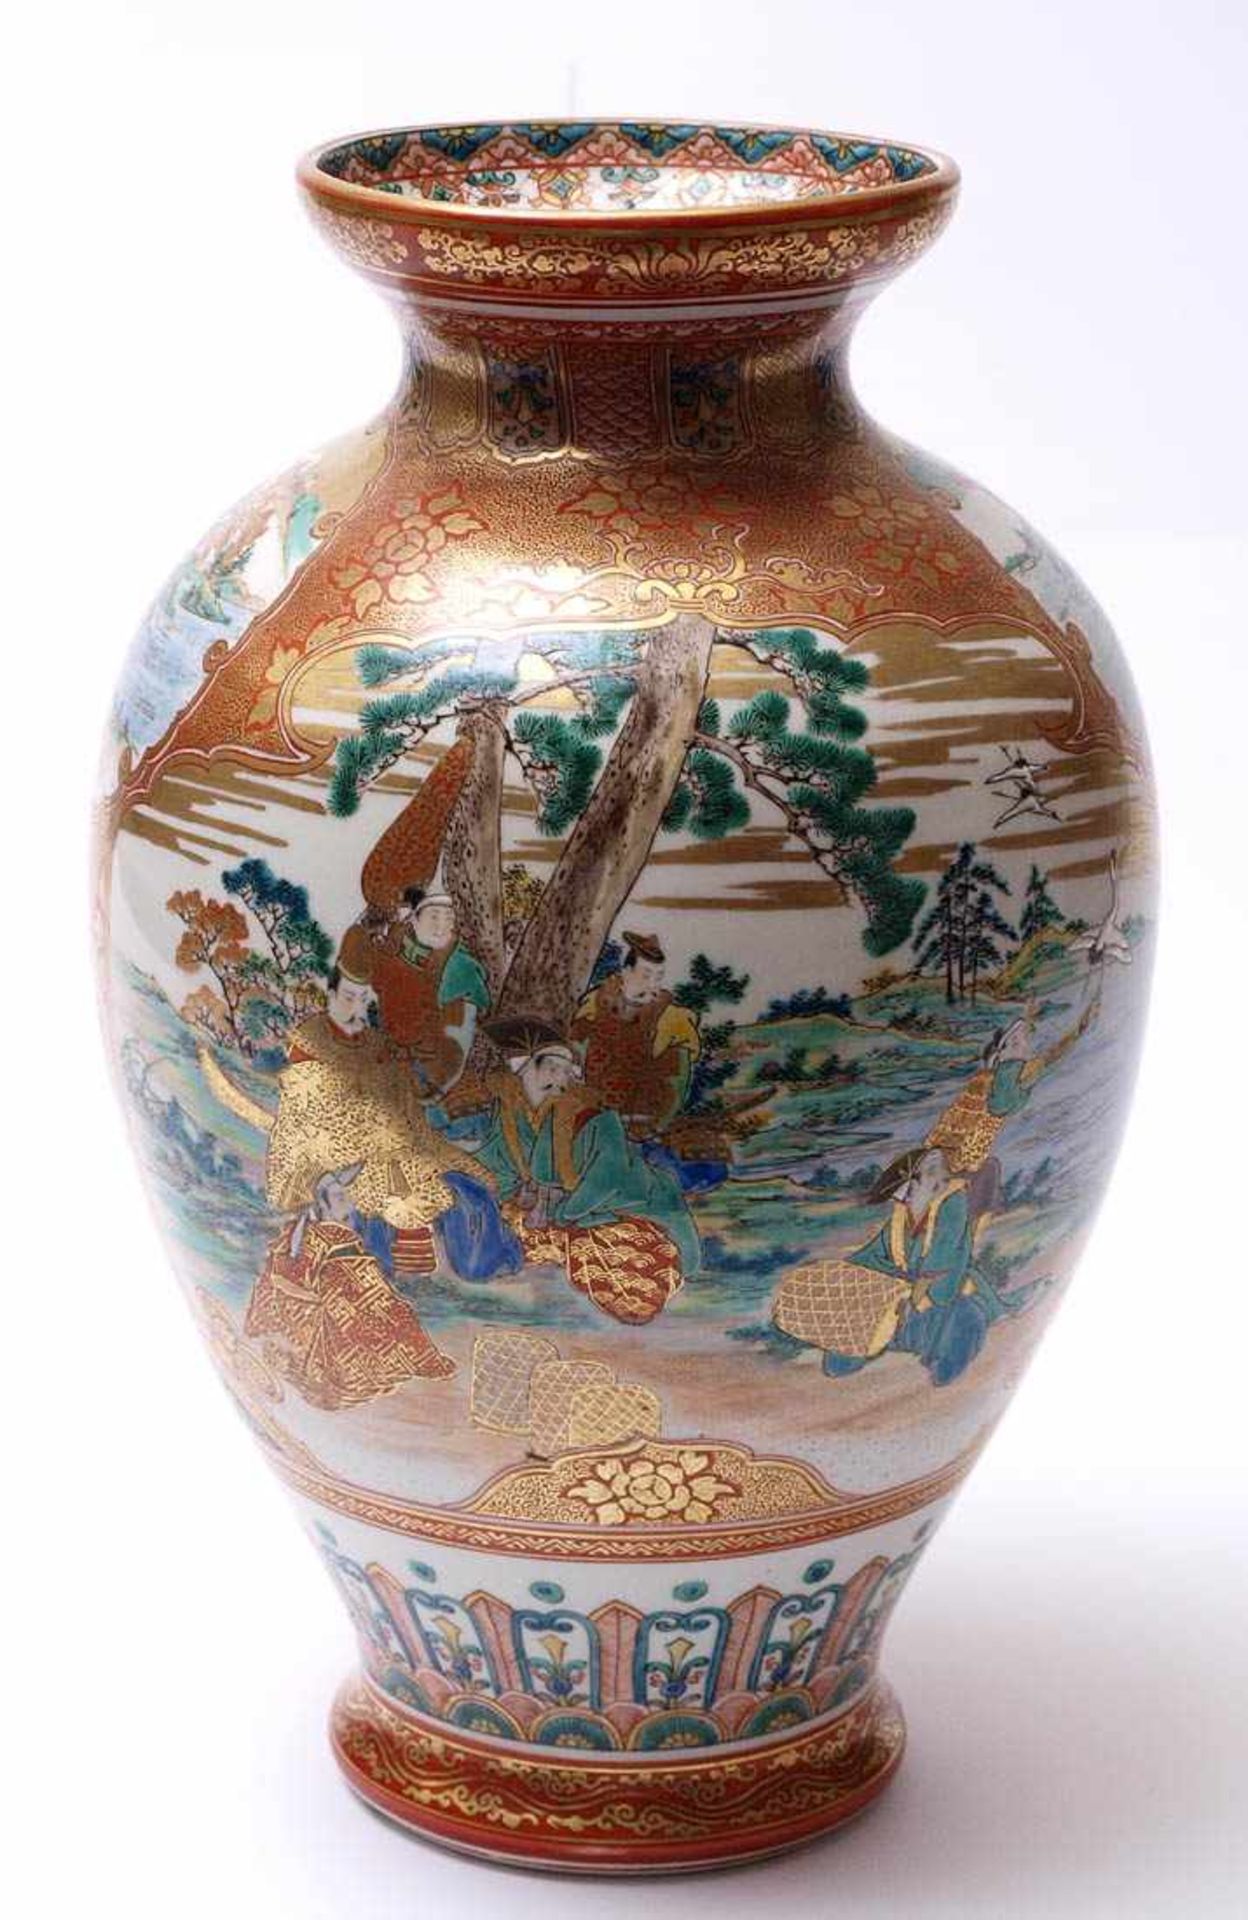 Vase, Japan, um 1850 Balusterförmiger Korpus. Oberfläche mit goldener Floralmalerei auf eisenrotem